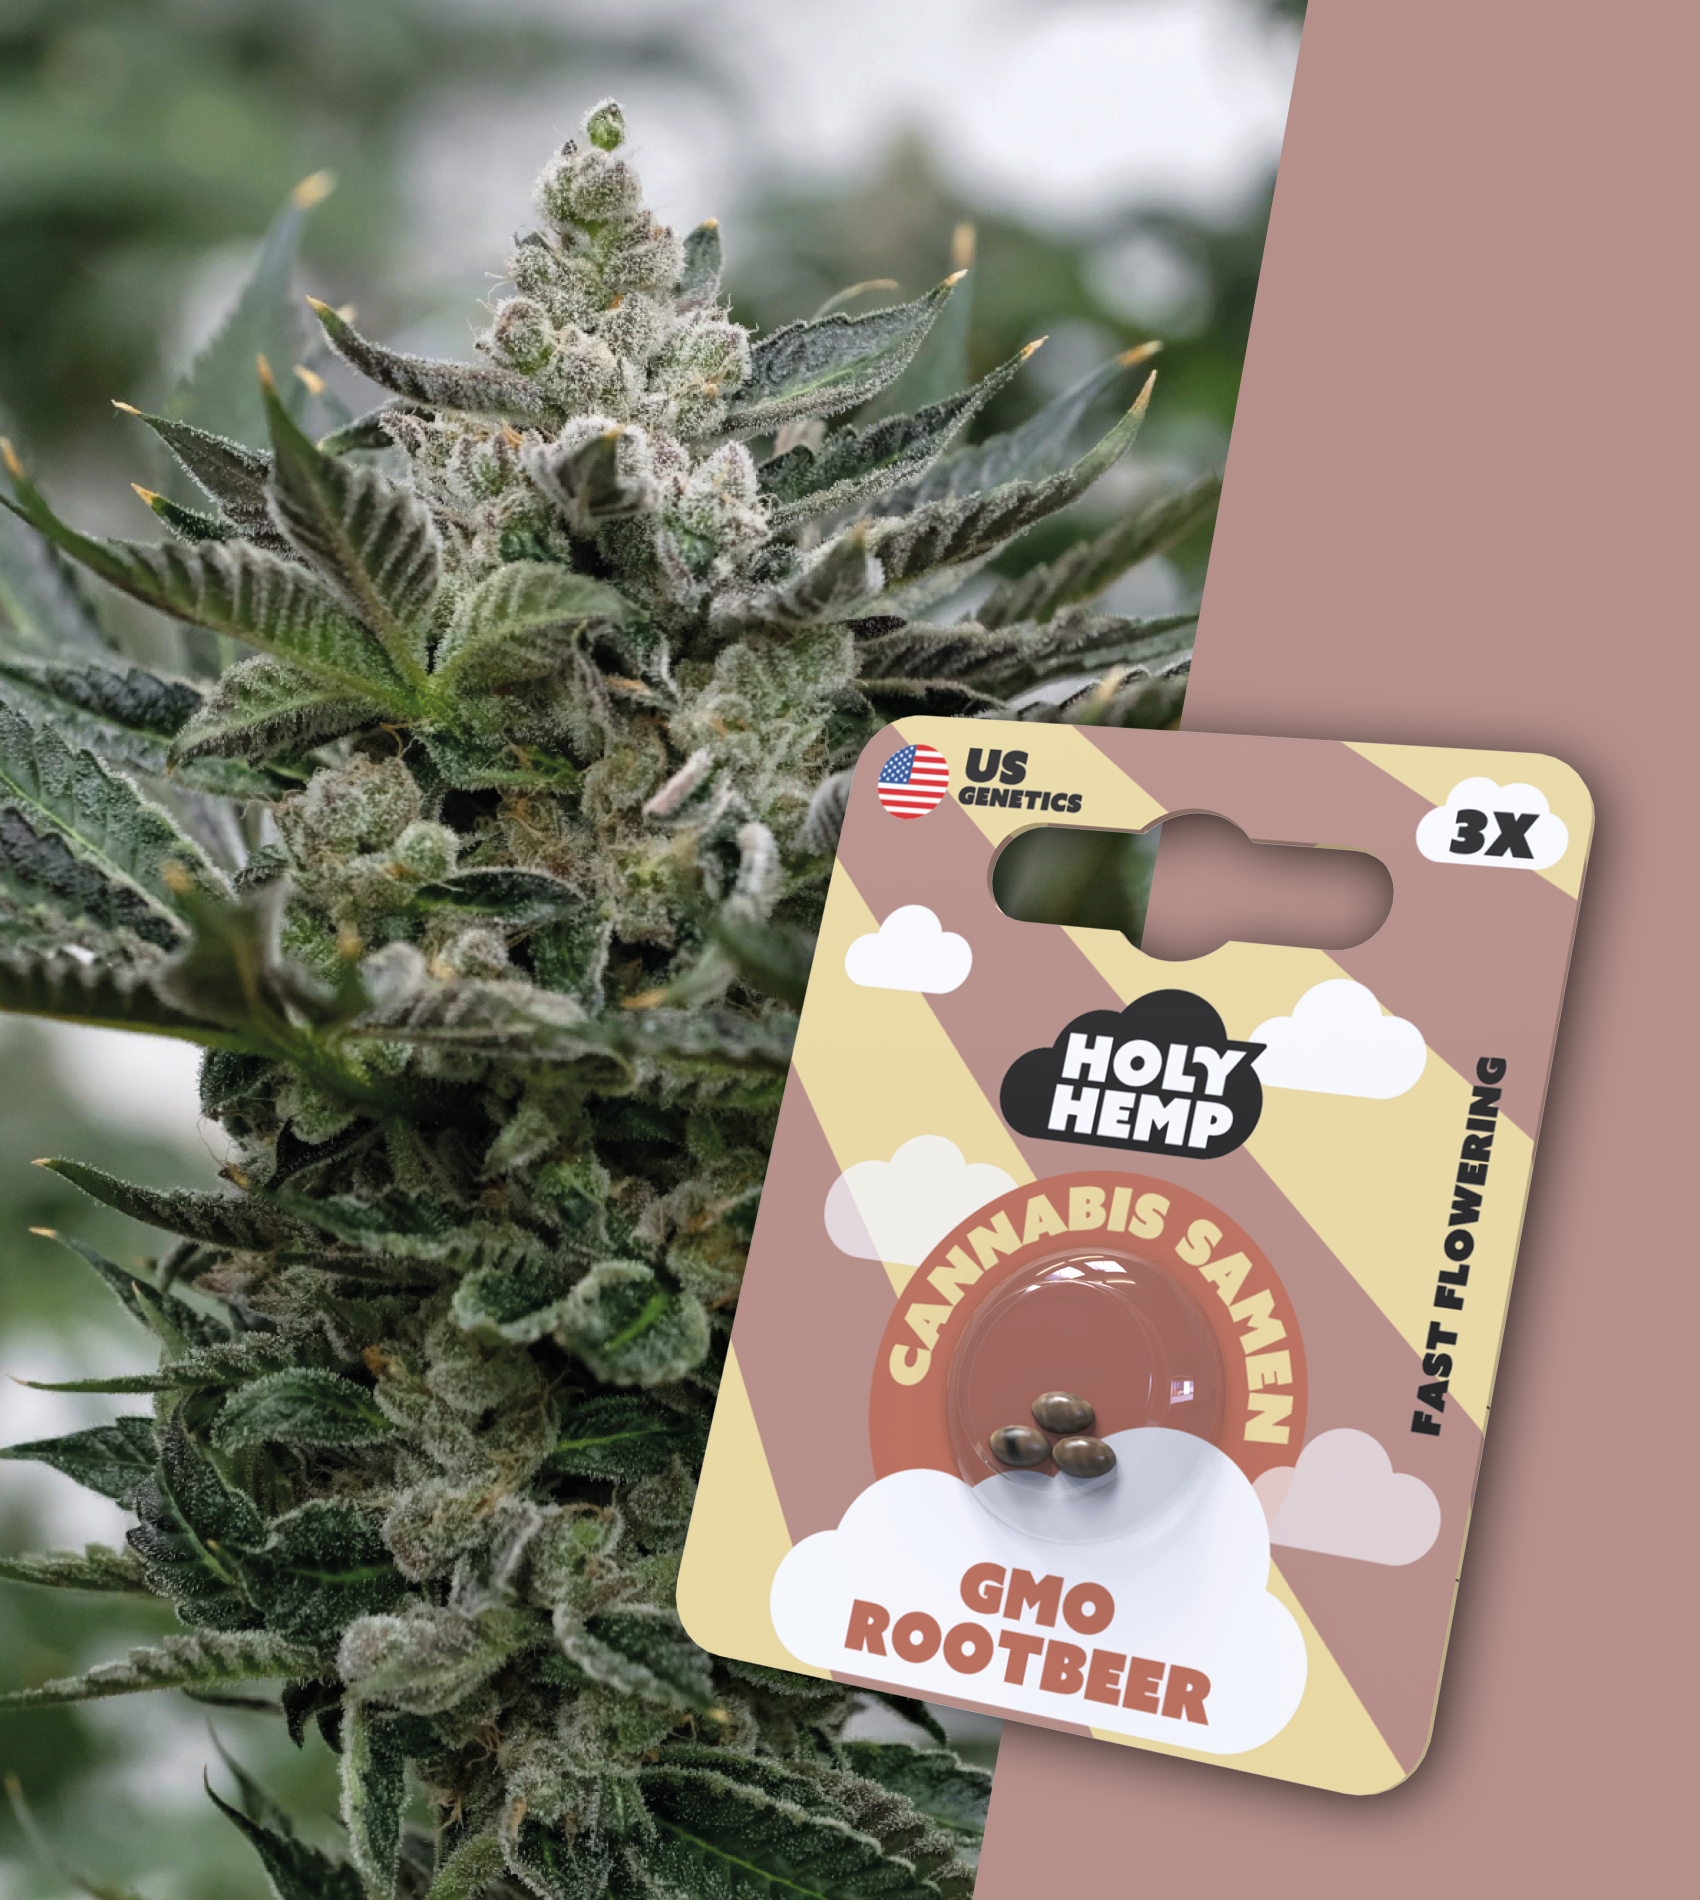 Holy Hemp Cannabissamen - GMO Rootbeer